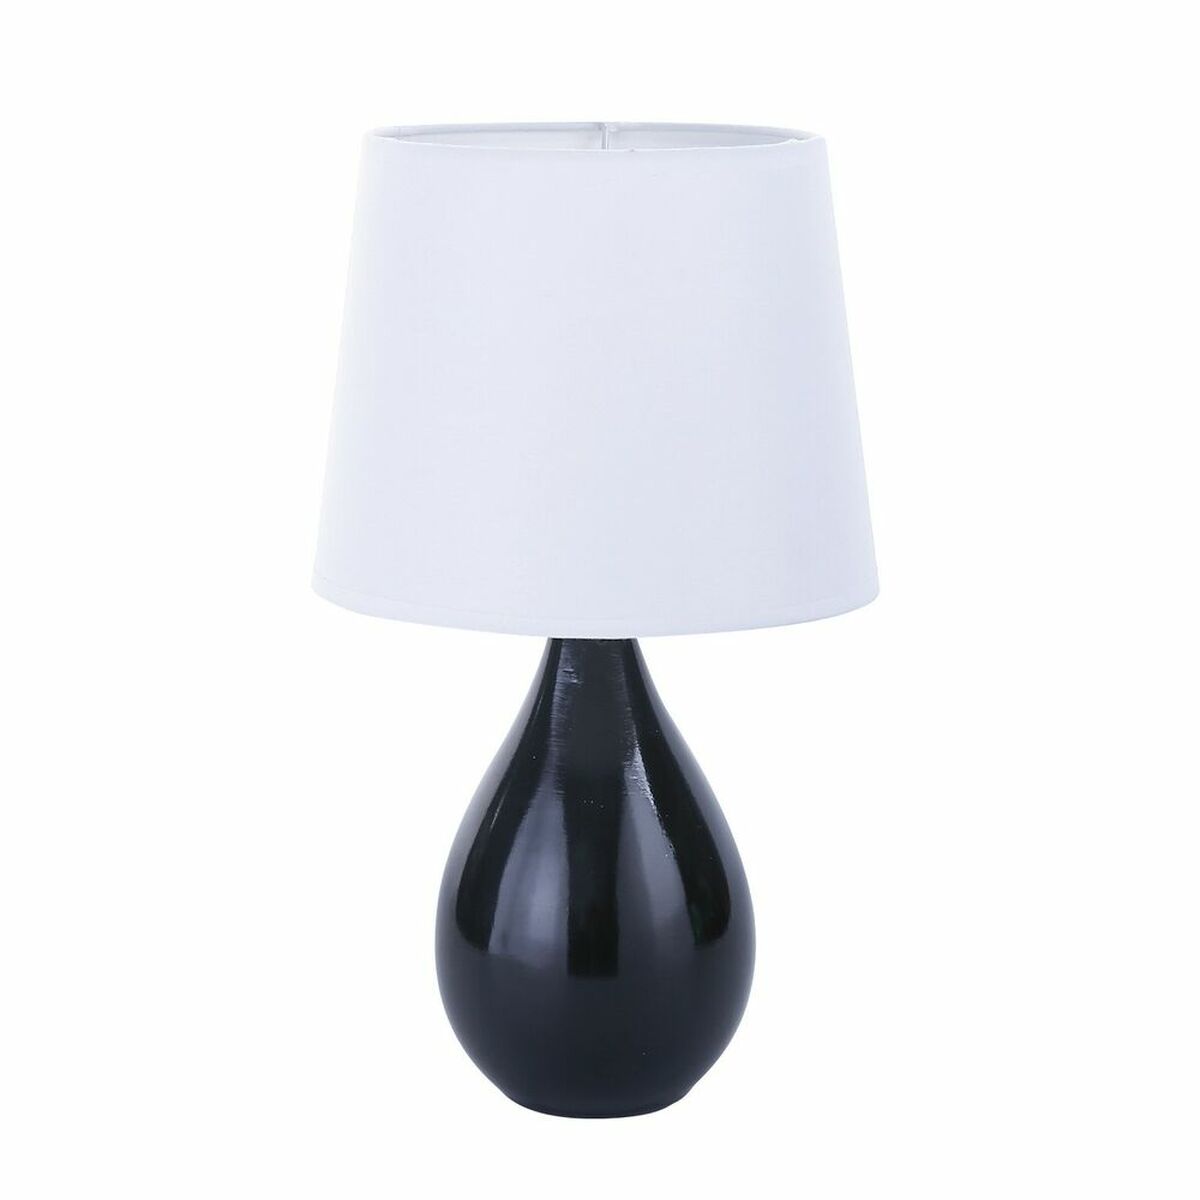 Table lamp Versa Camy Black Ceramic (20 x 35 x 20 cm)